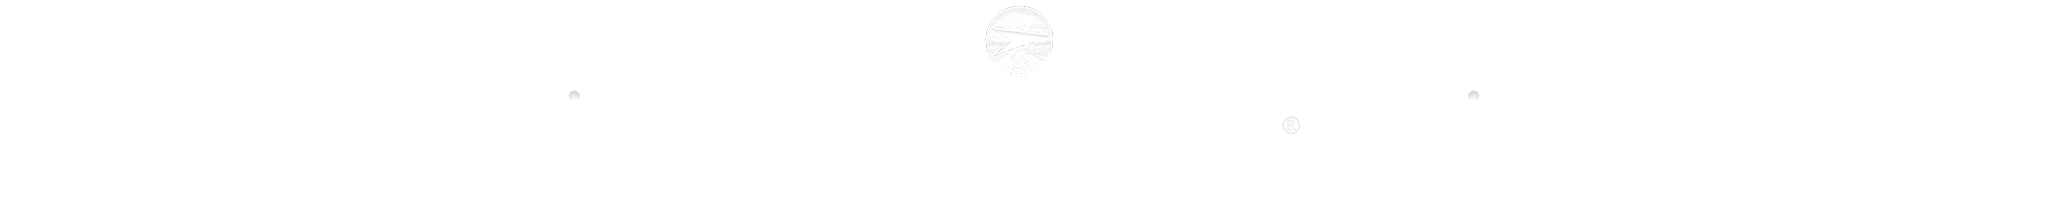 Michael A. Goldberg Films ®